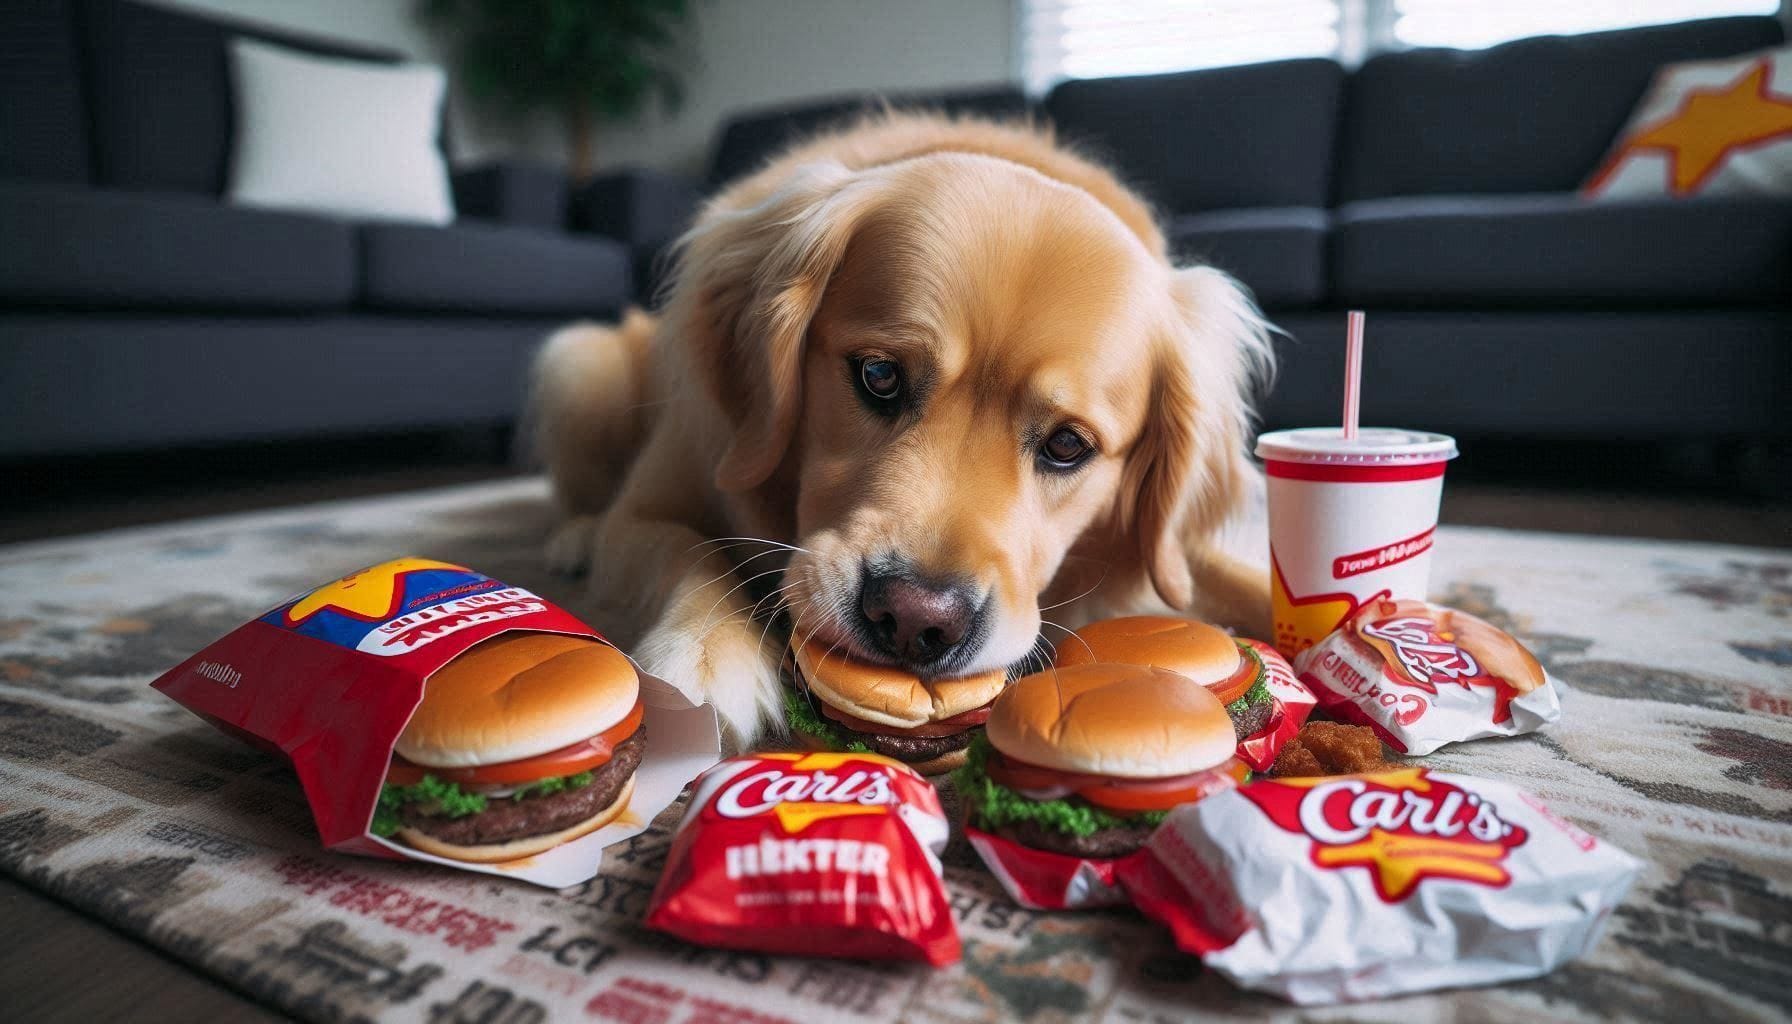 A Dog Eating a Carl's Jr. Burgers